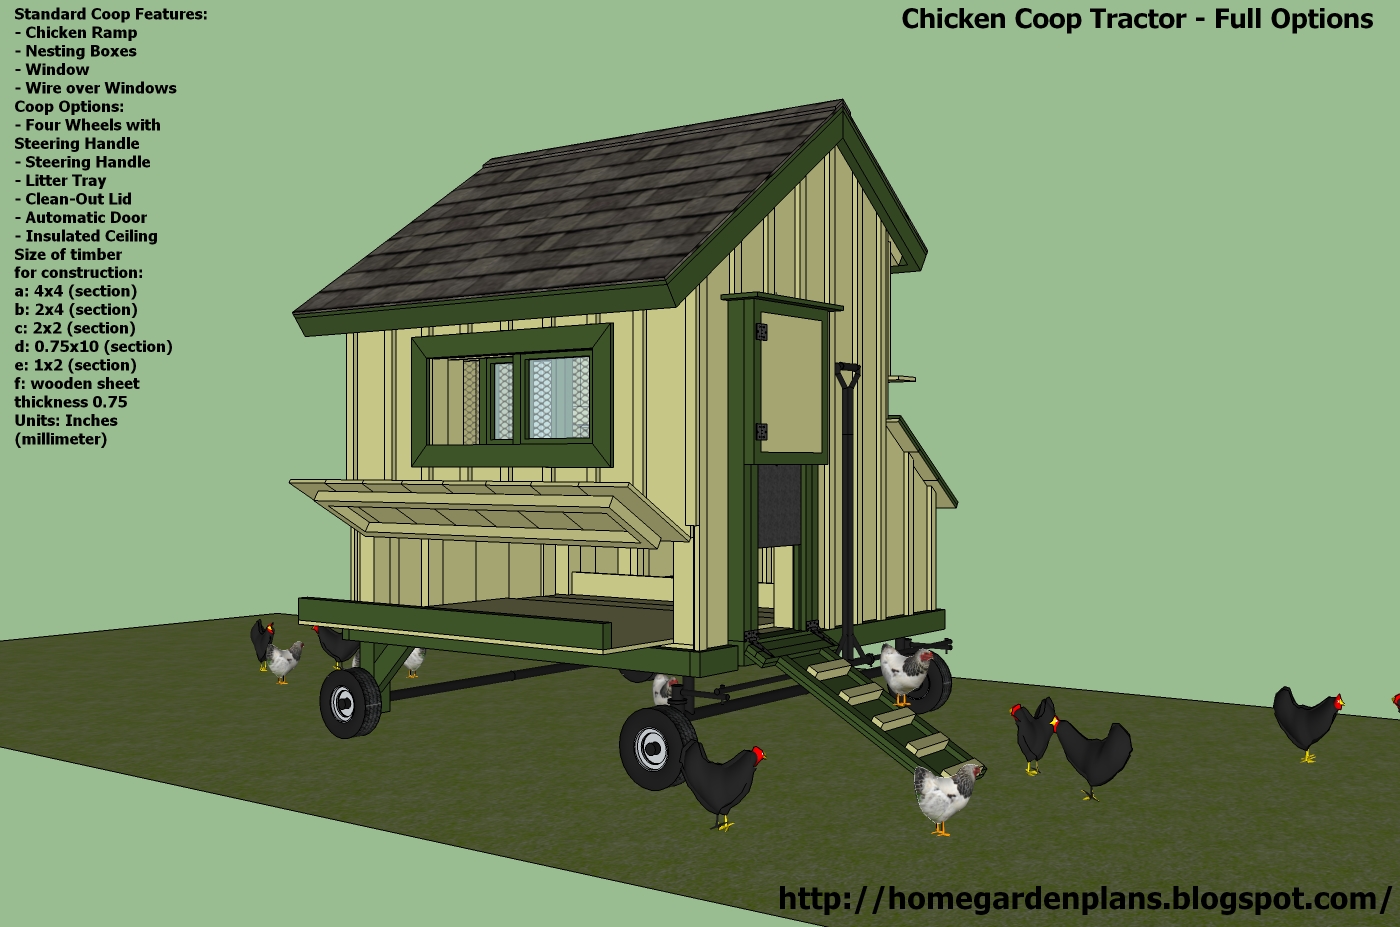 Hens Plans: Knowing Chicken coop plans deep litter